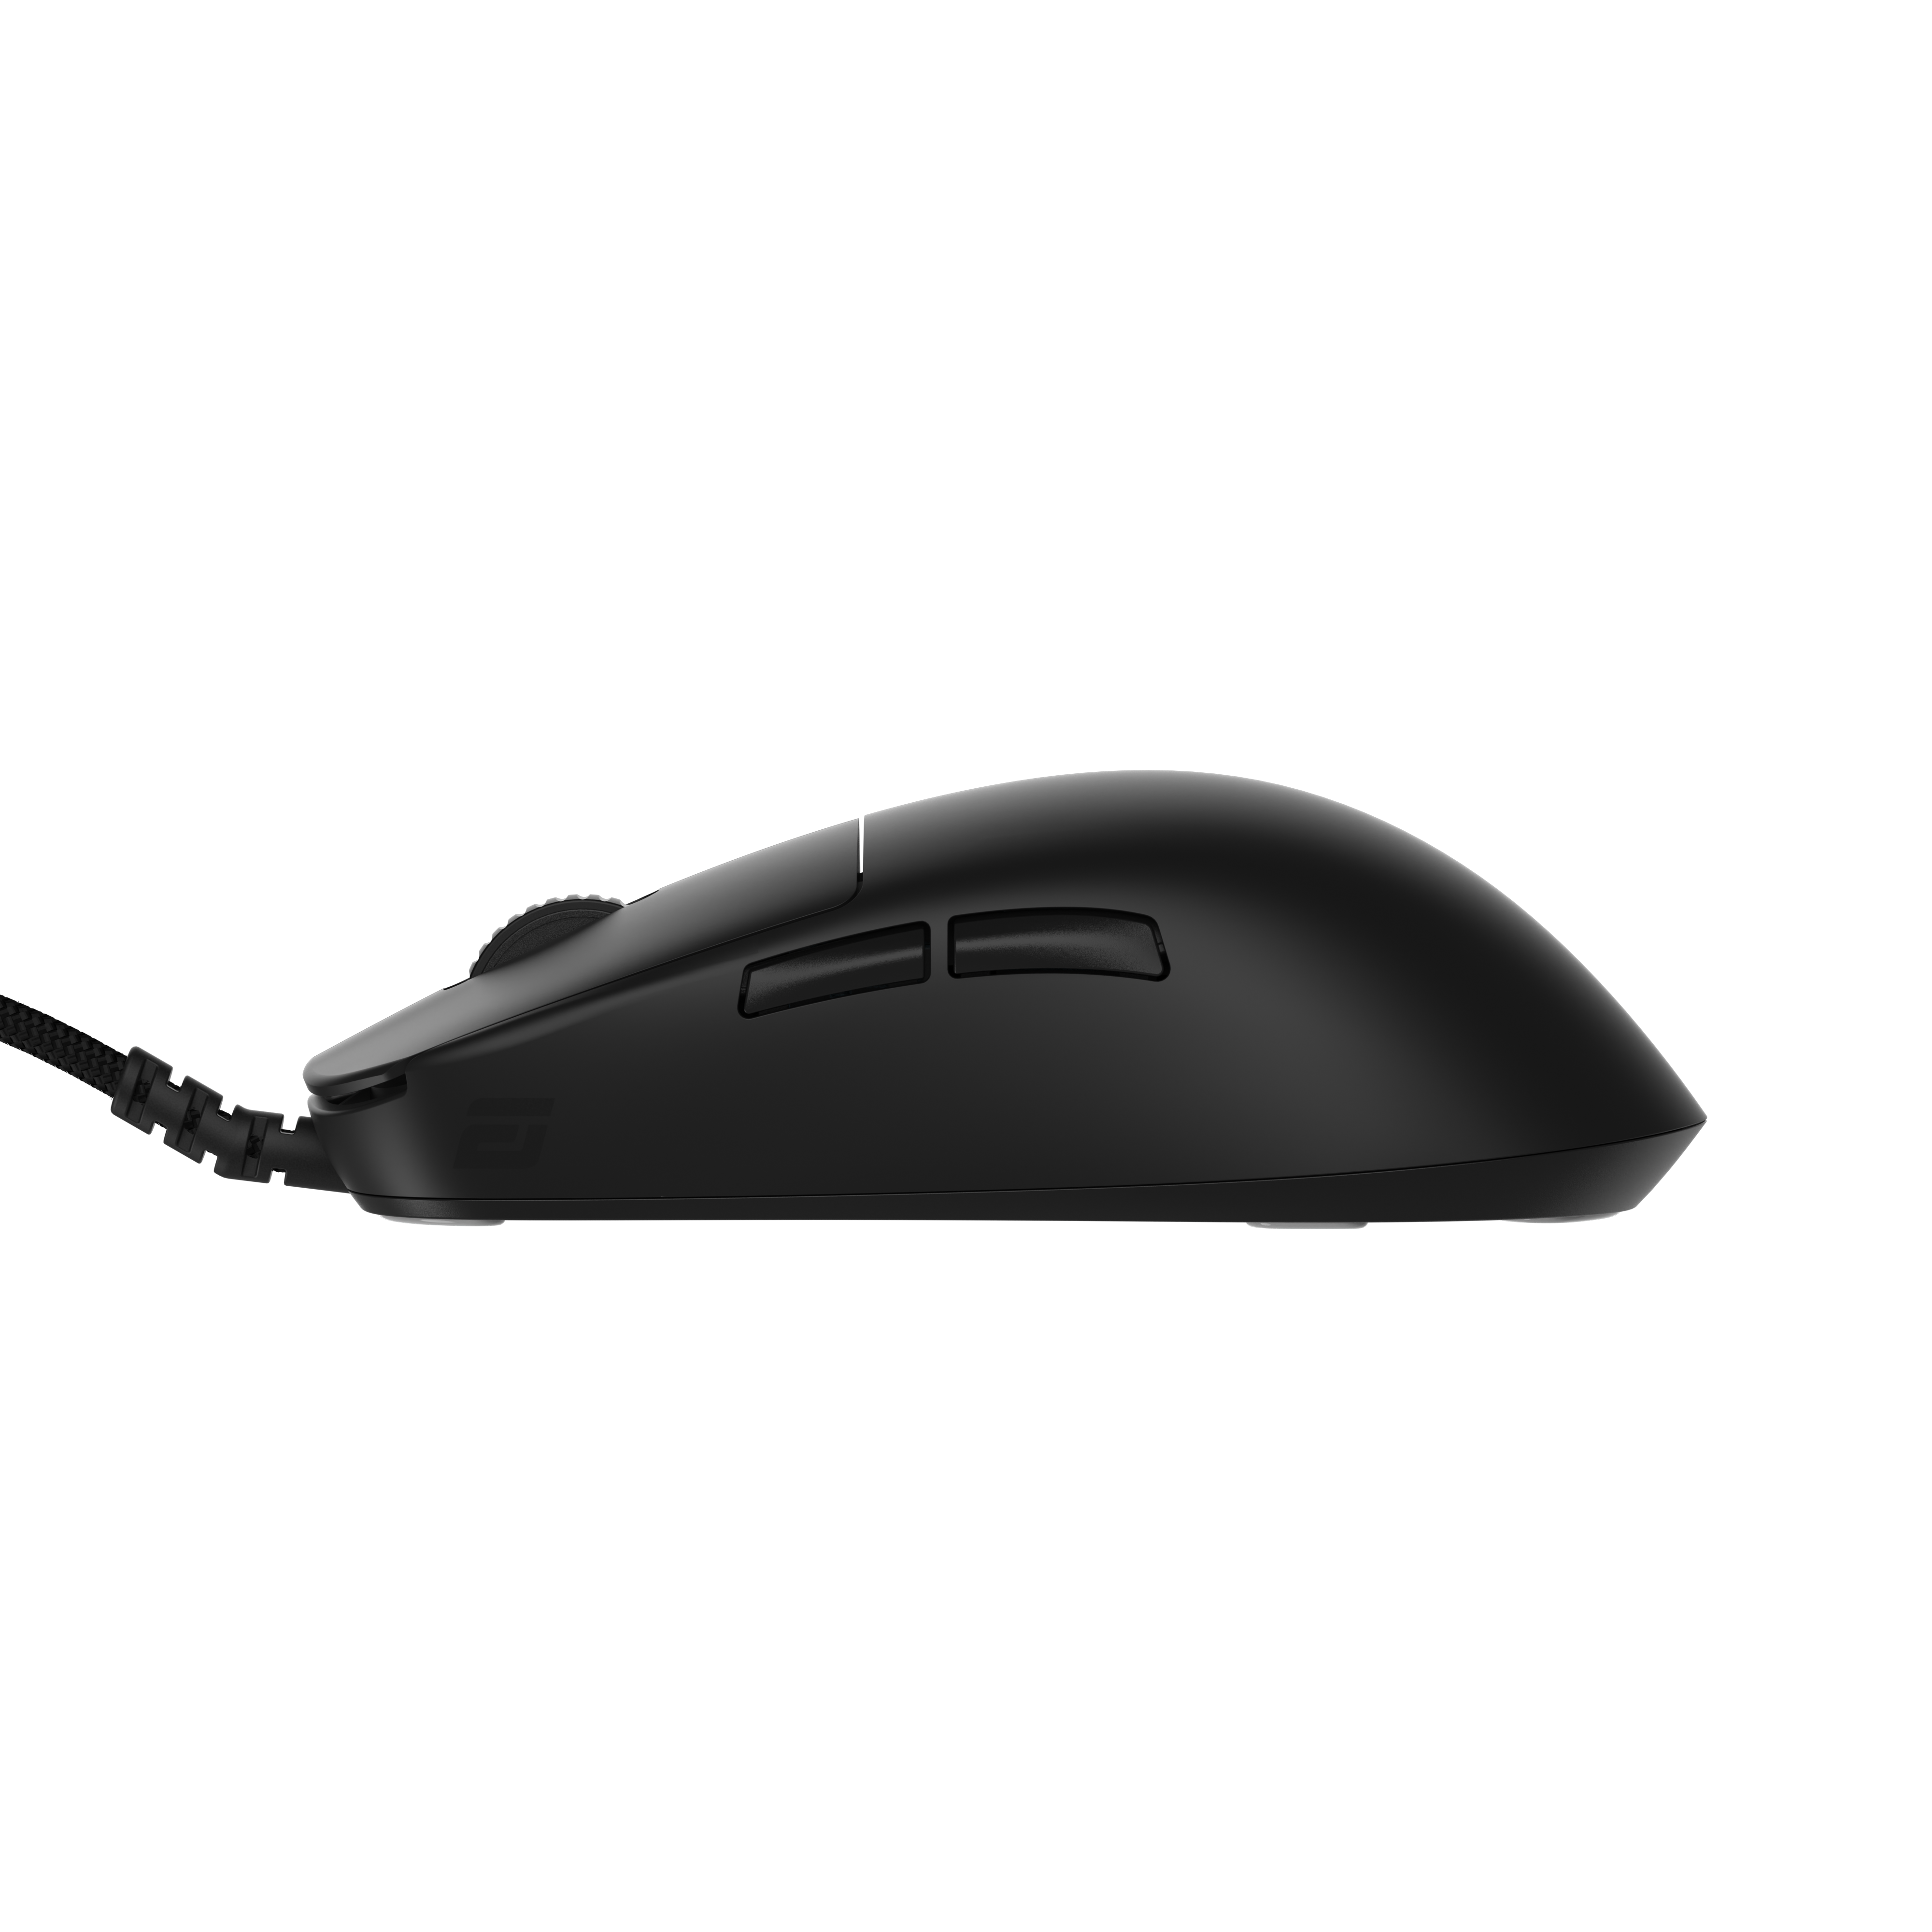 Endgame Gear - Endgame Gear OP1 8k USB Optical Gaming Mouse - Black